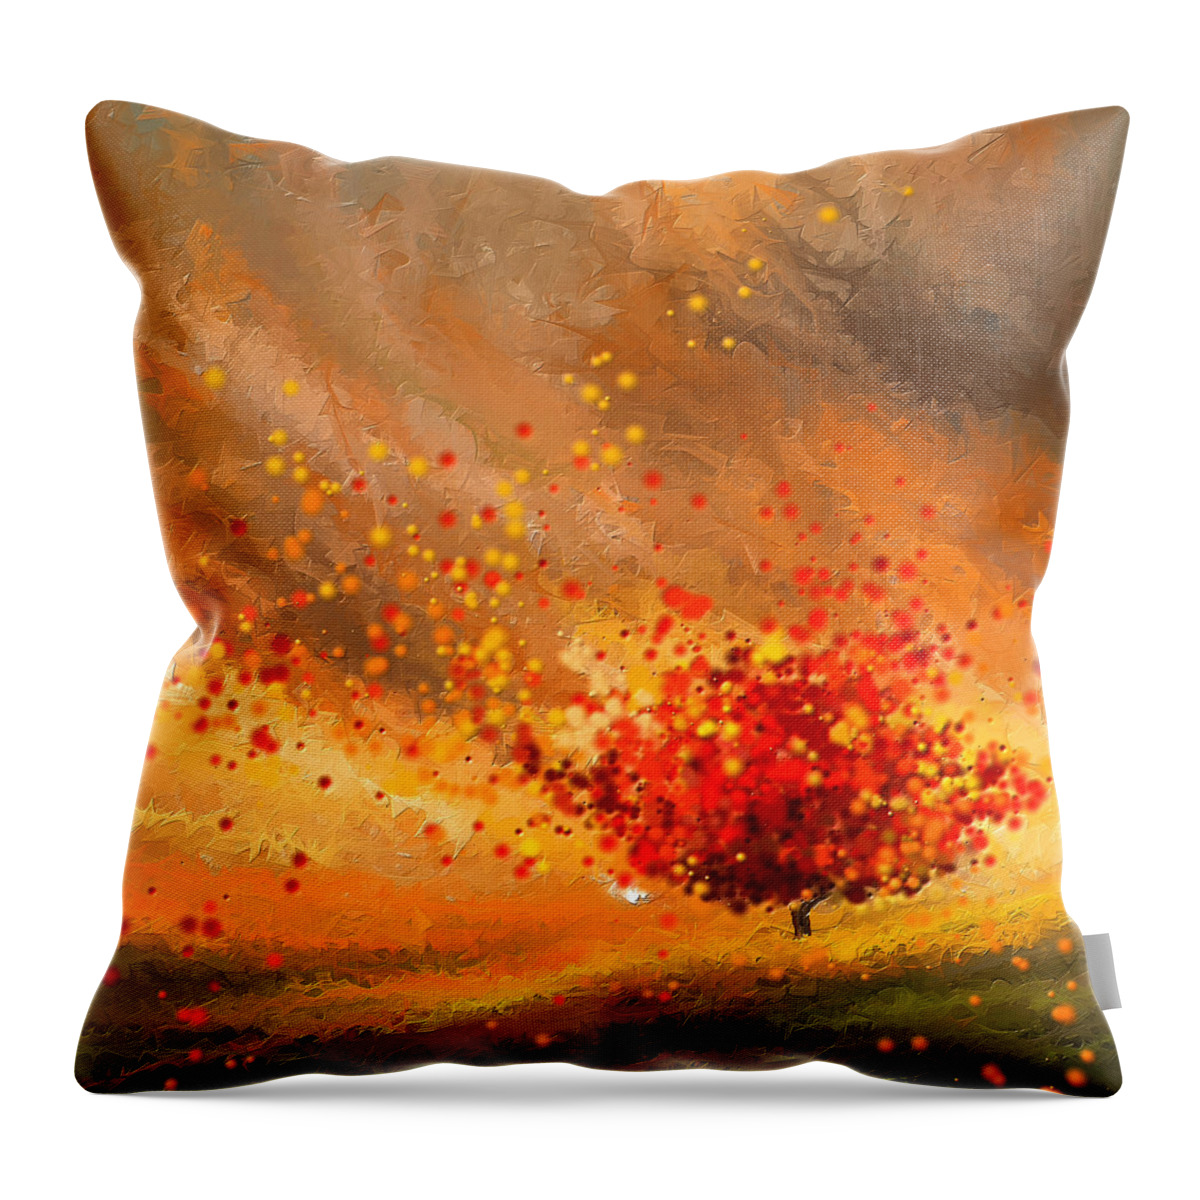 Four Seasons Throw Pillow featuring the painting Autumn-Four Seasons- Four Seasons Art by Lourry Legarde